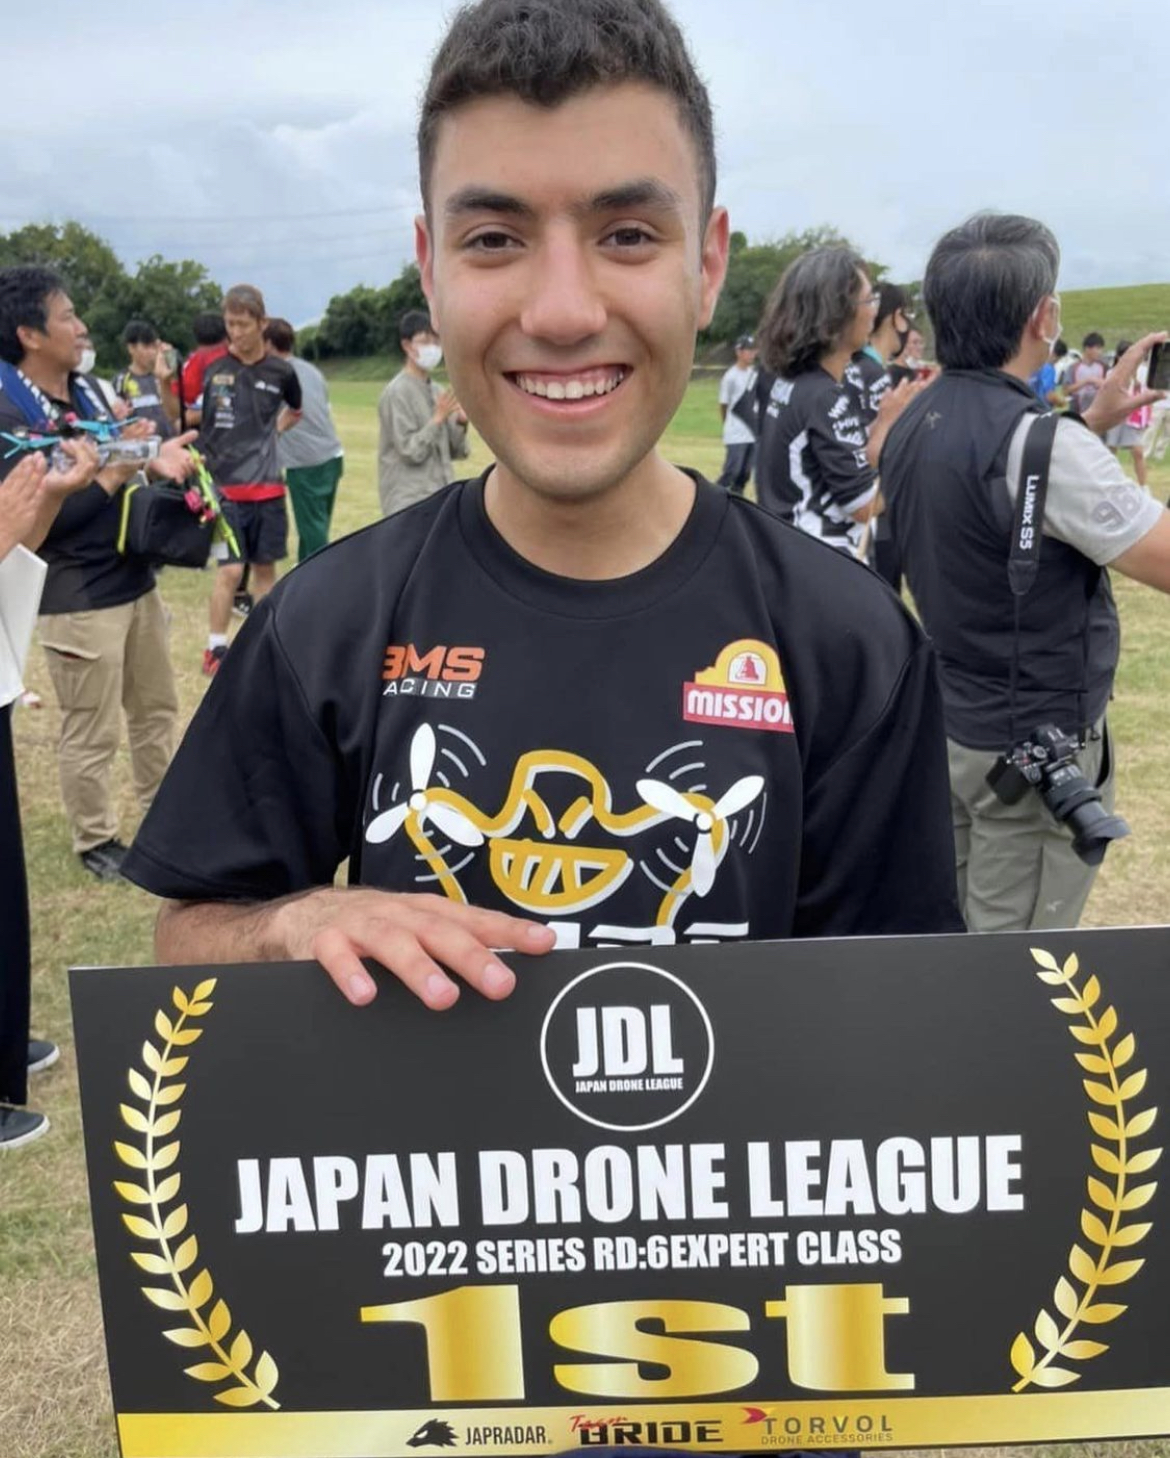 Japan Drone League - Tattu Pilot Team